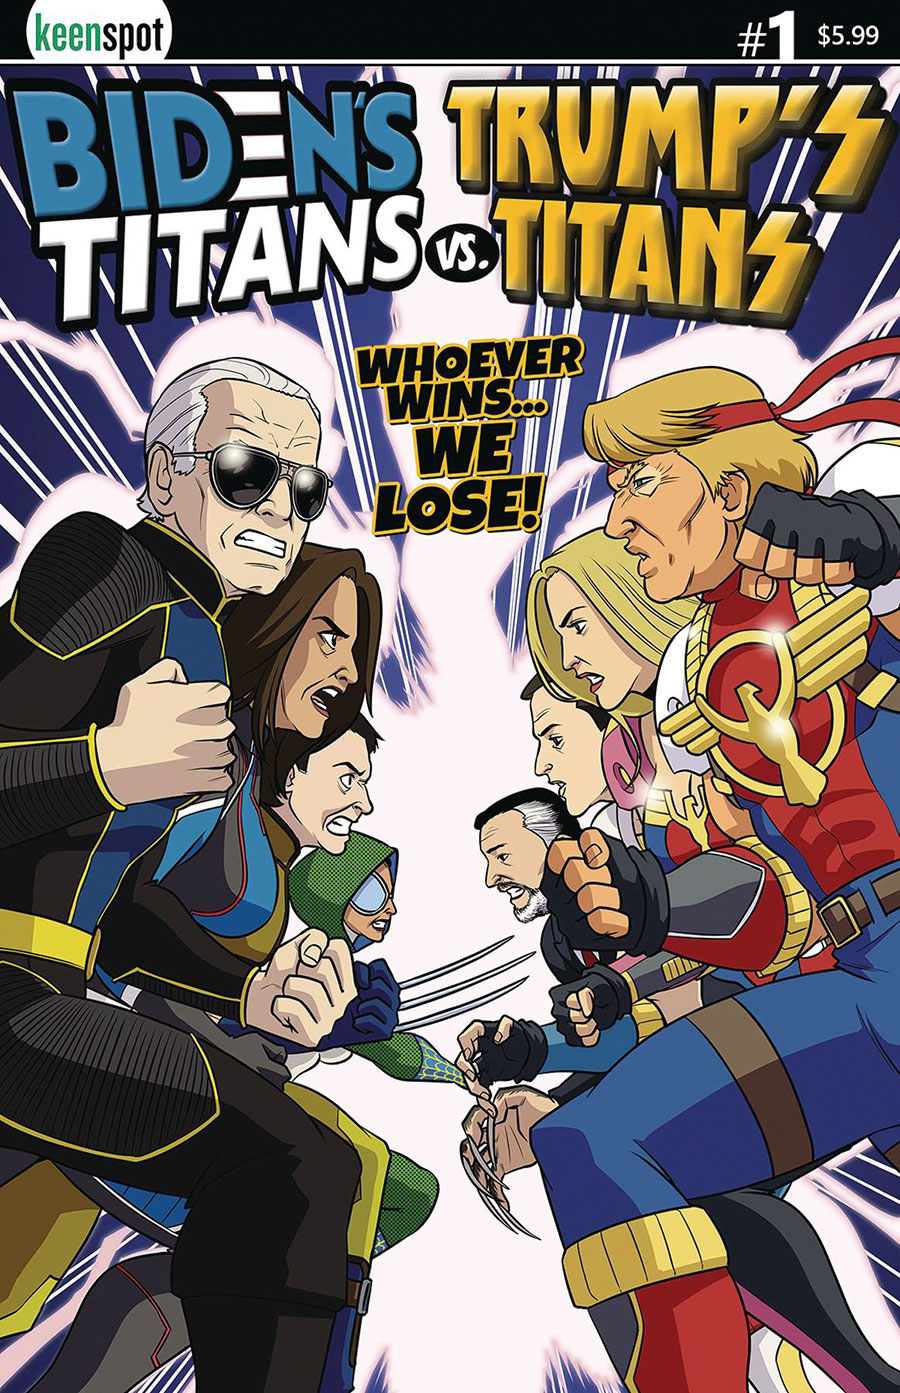 Bidens Titans vs Trumps Titans #1 (One Shot) Cover A Regular Titans vs Titans Cover